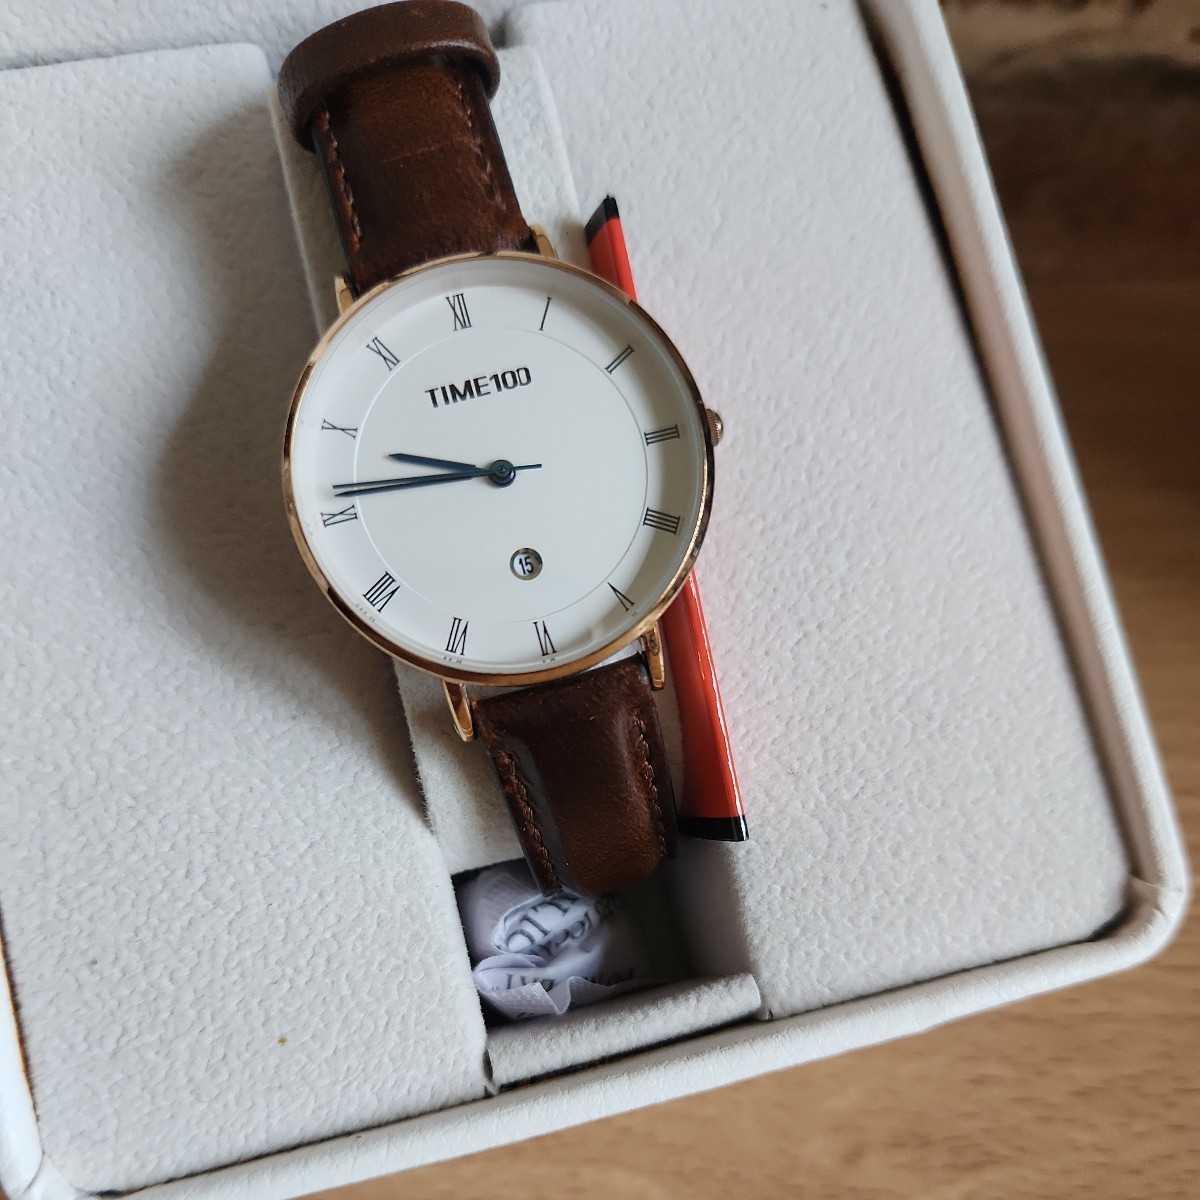 TIME100  аналоговый  кварцевый  наручные часы   неиспользуемый   батарея села  